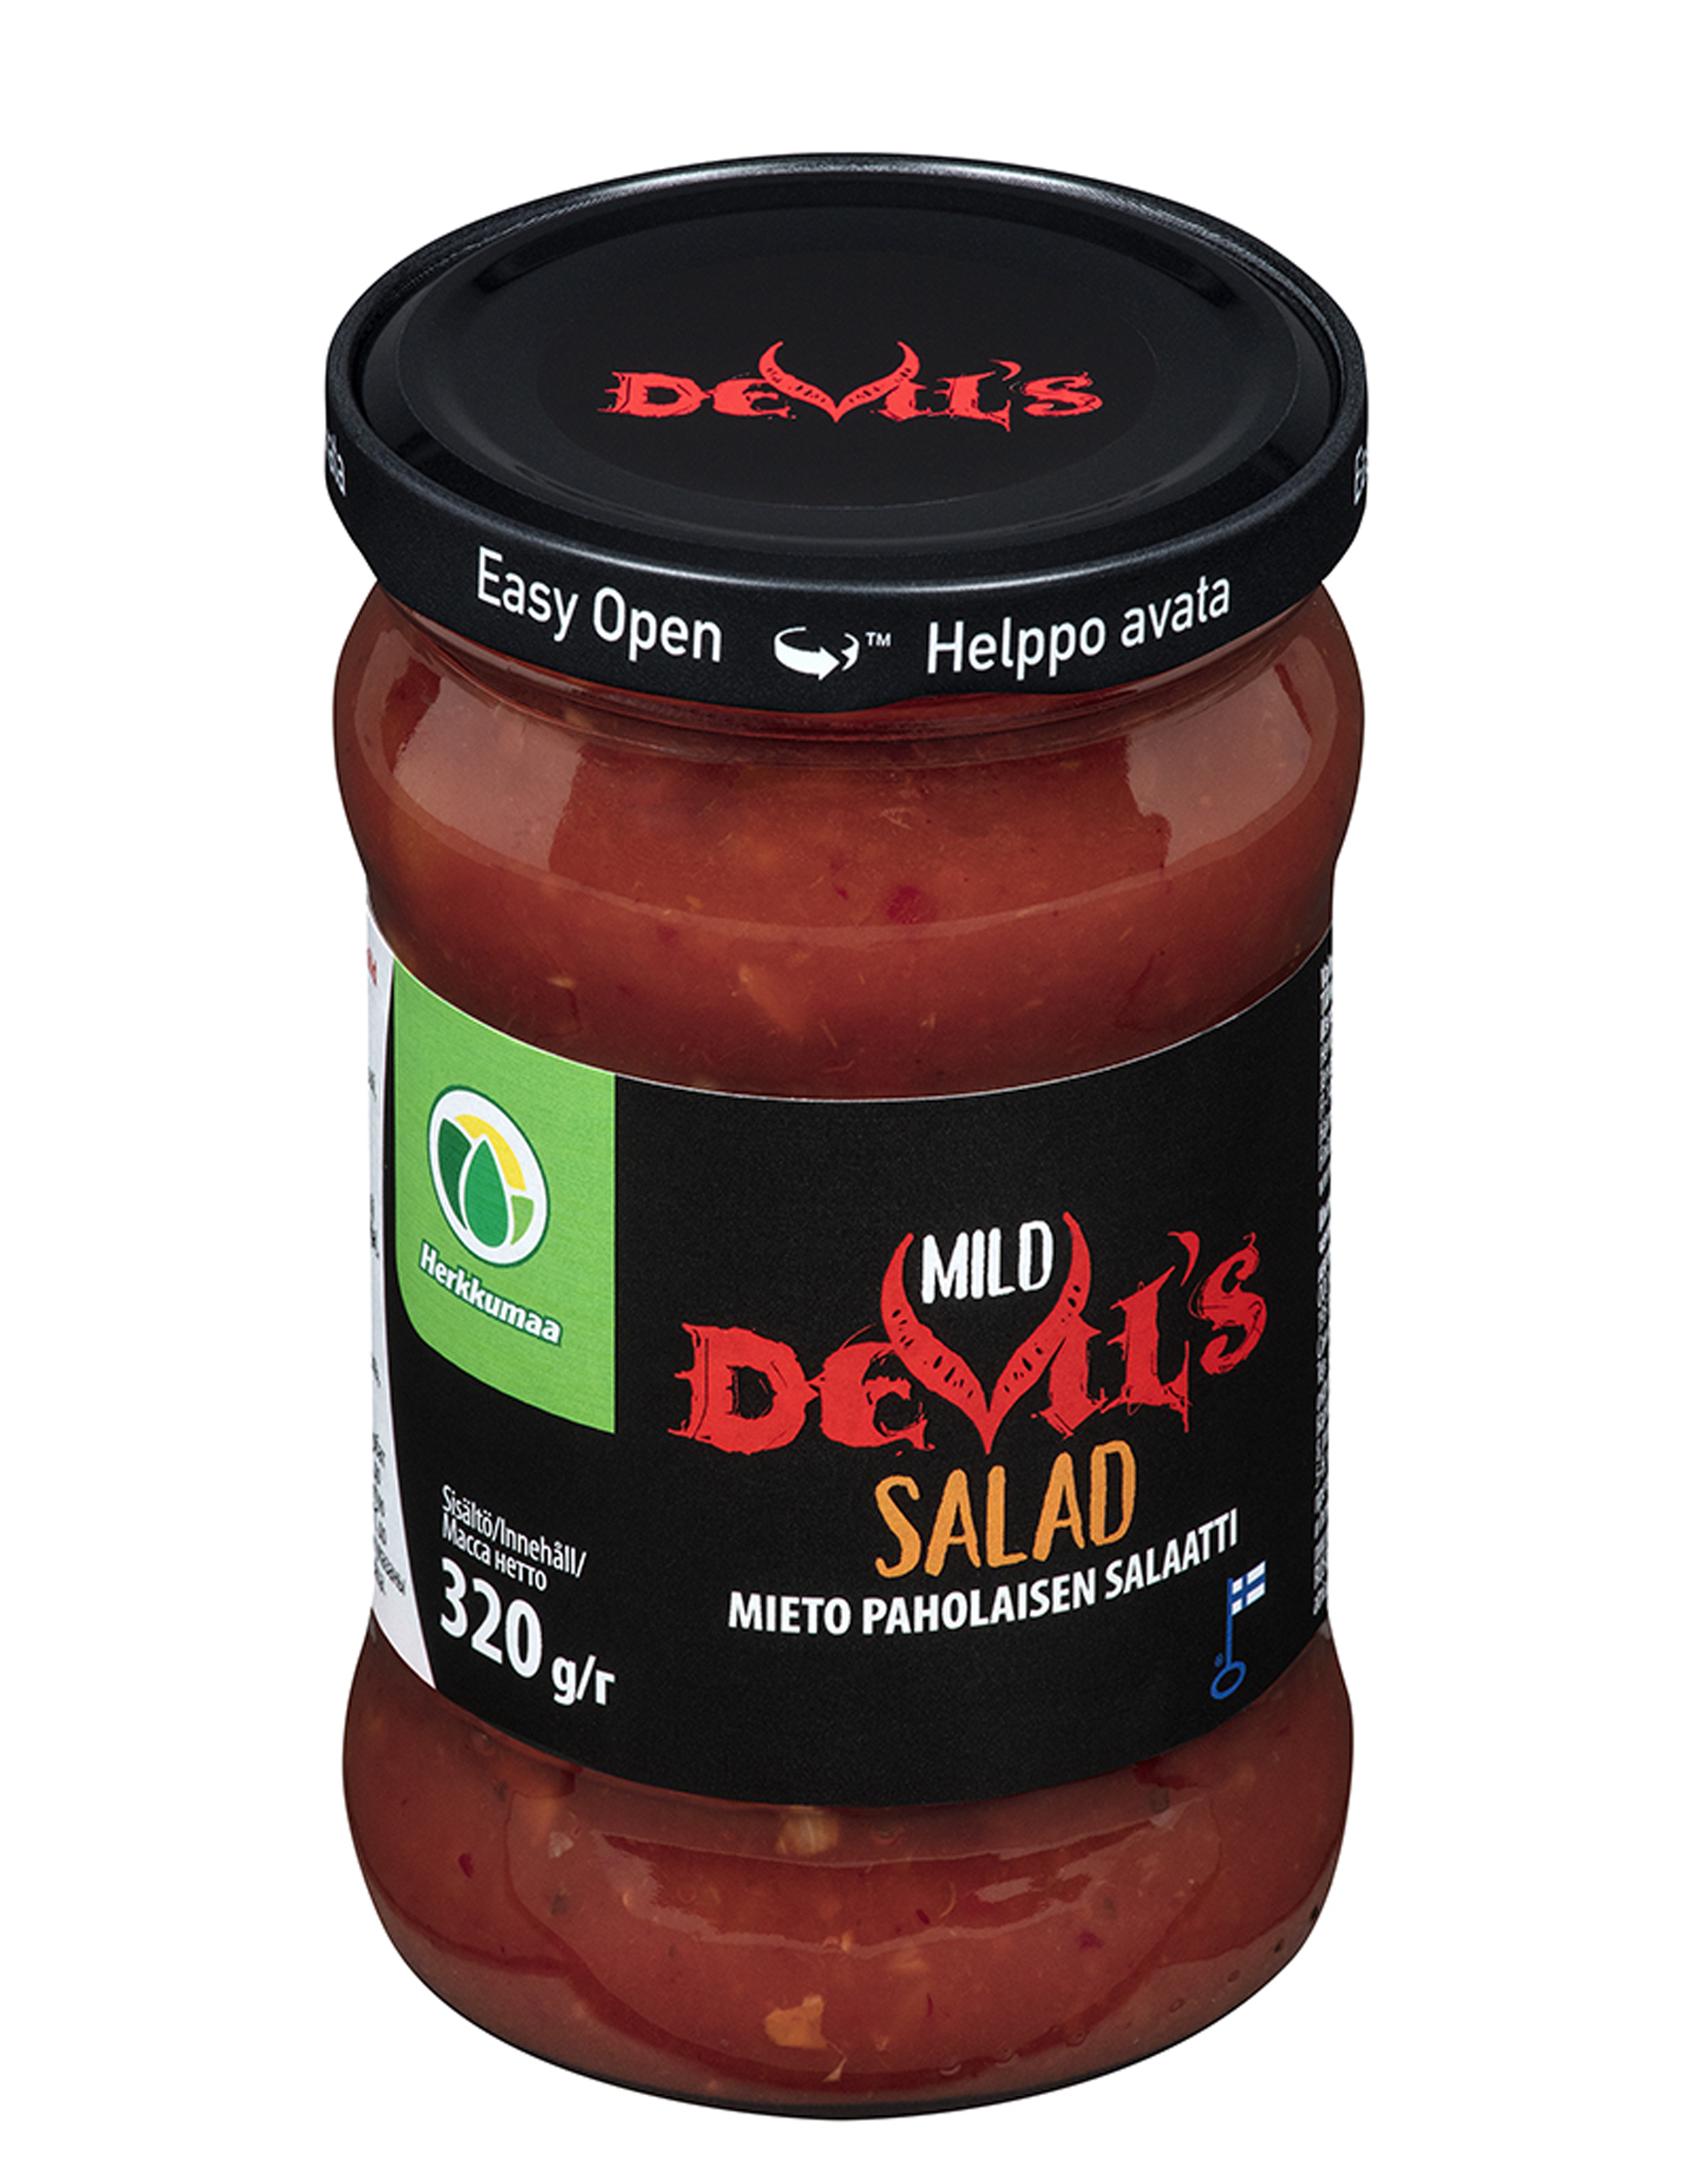 
Devils Salad paholaisen salaatti 320g mieto&#160;
